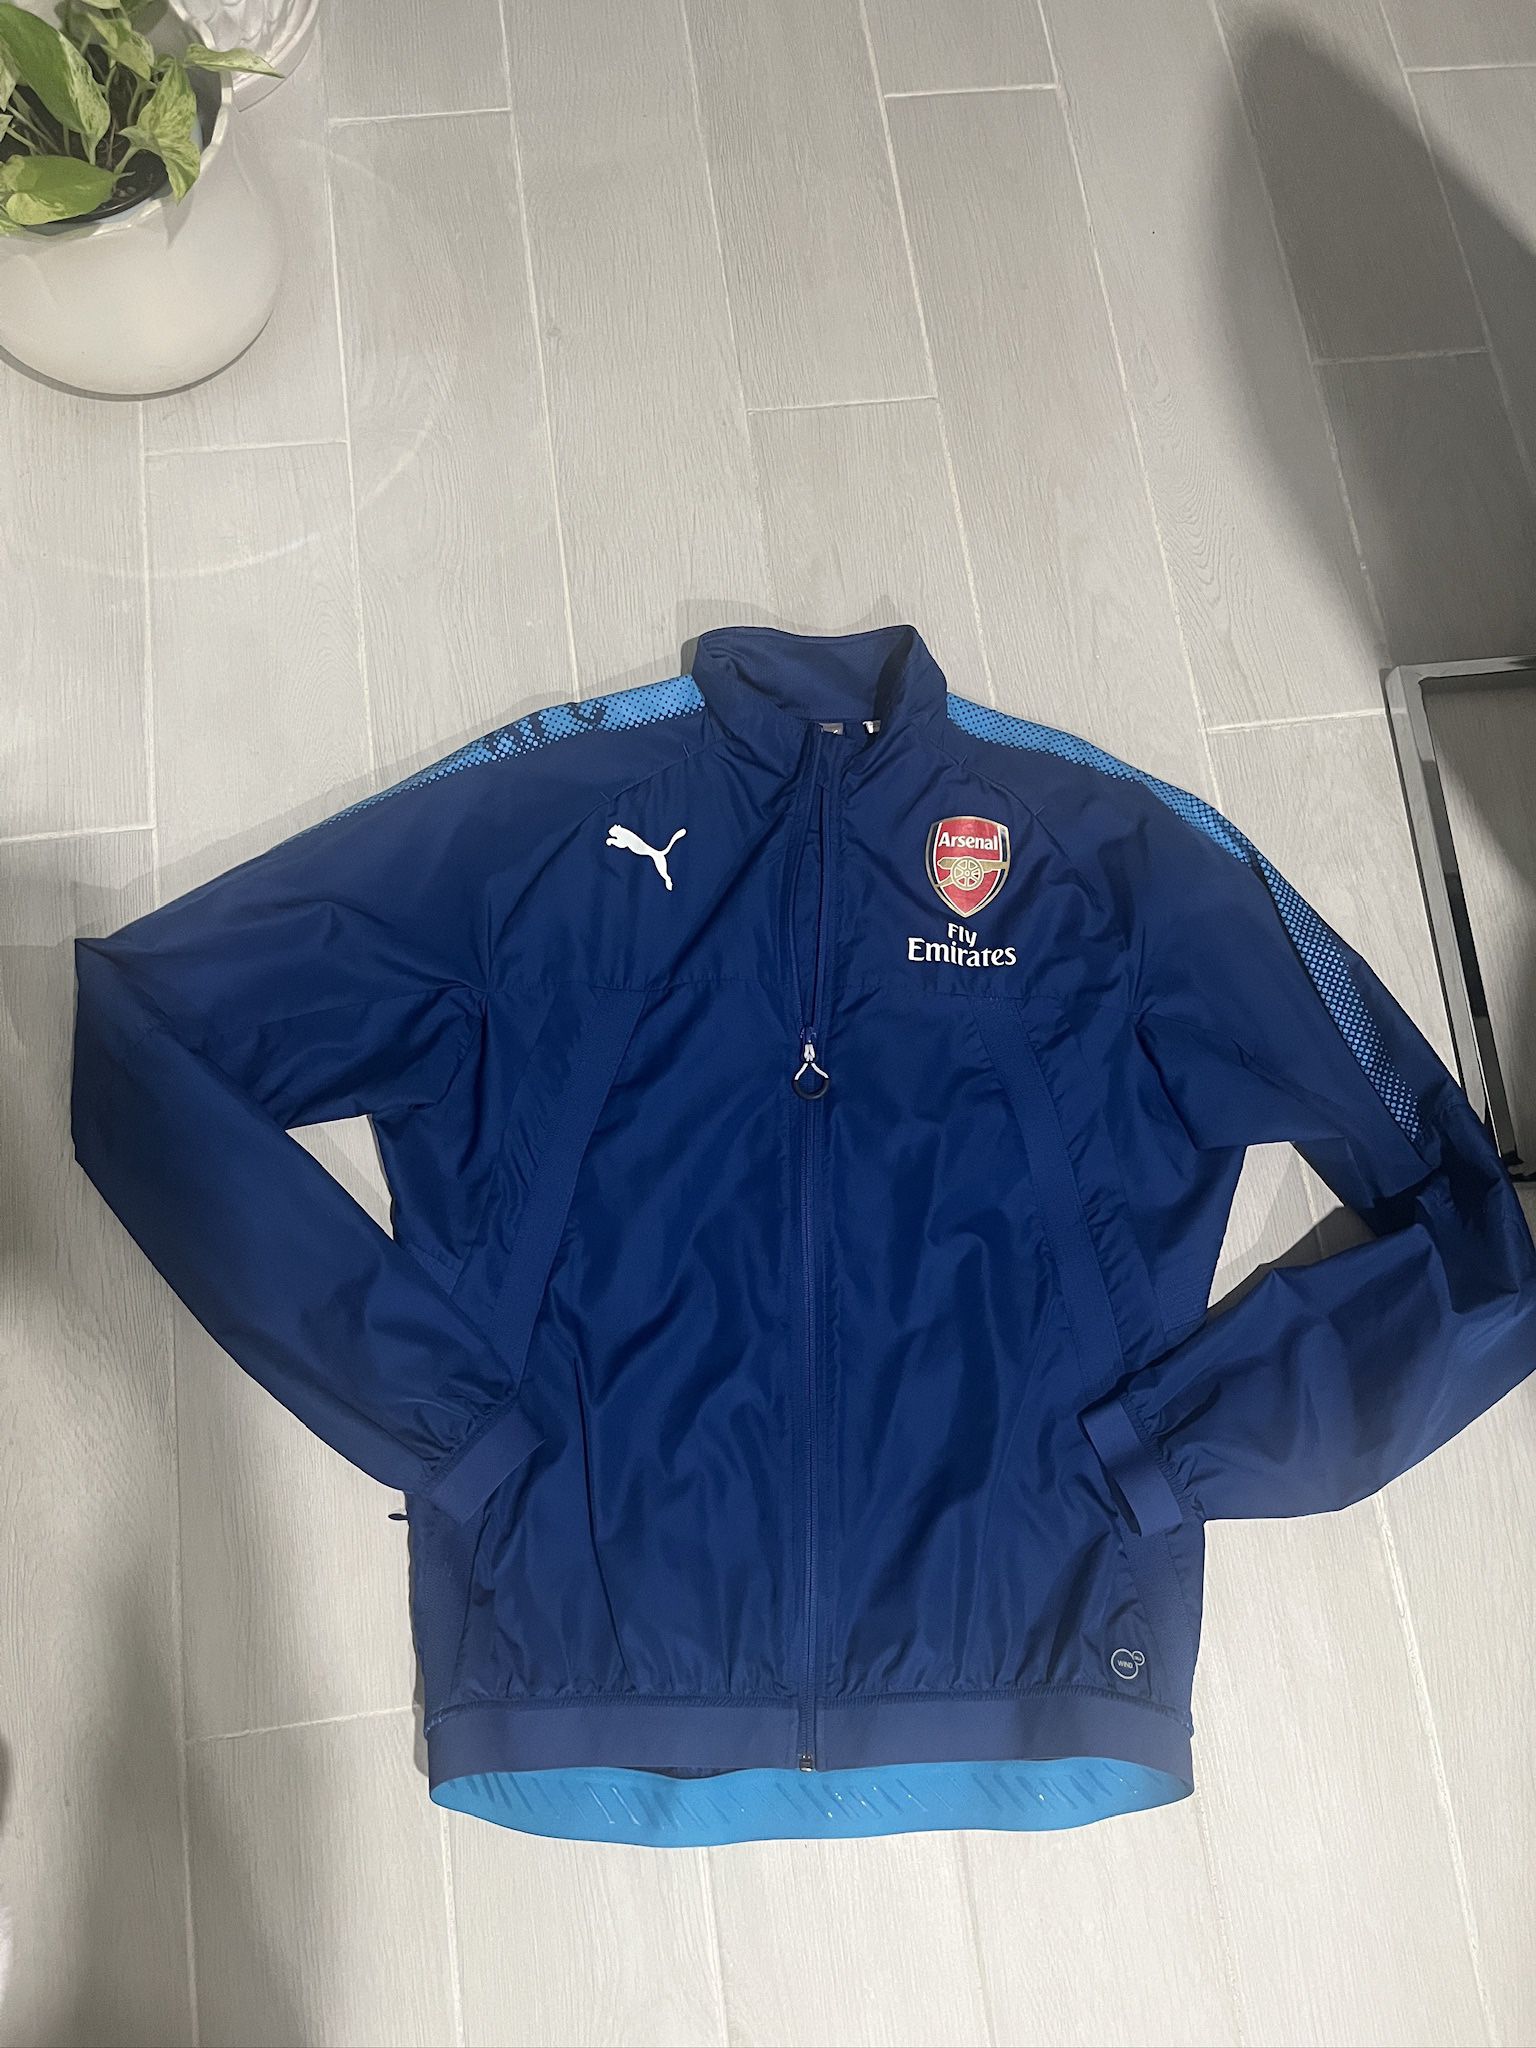 Puma Arsenal training jacket XL